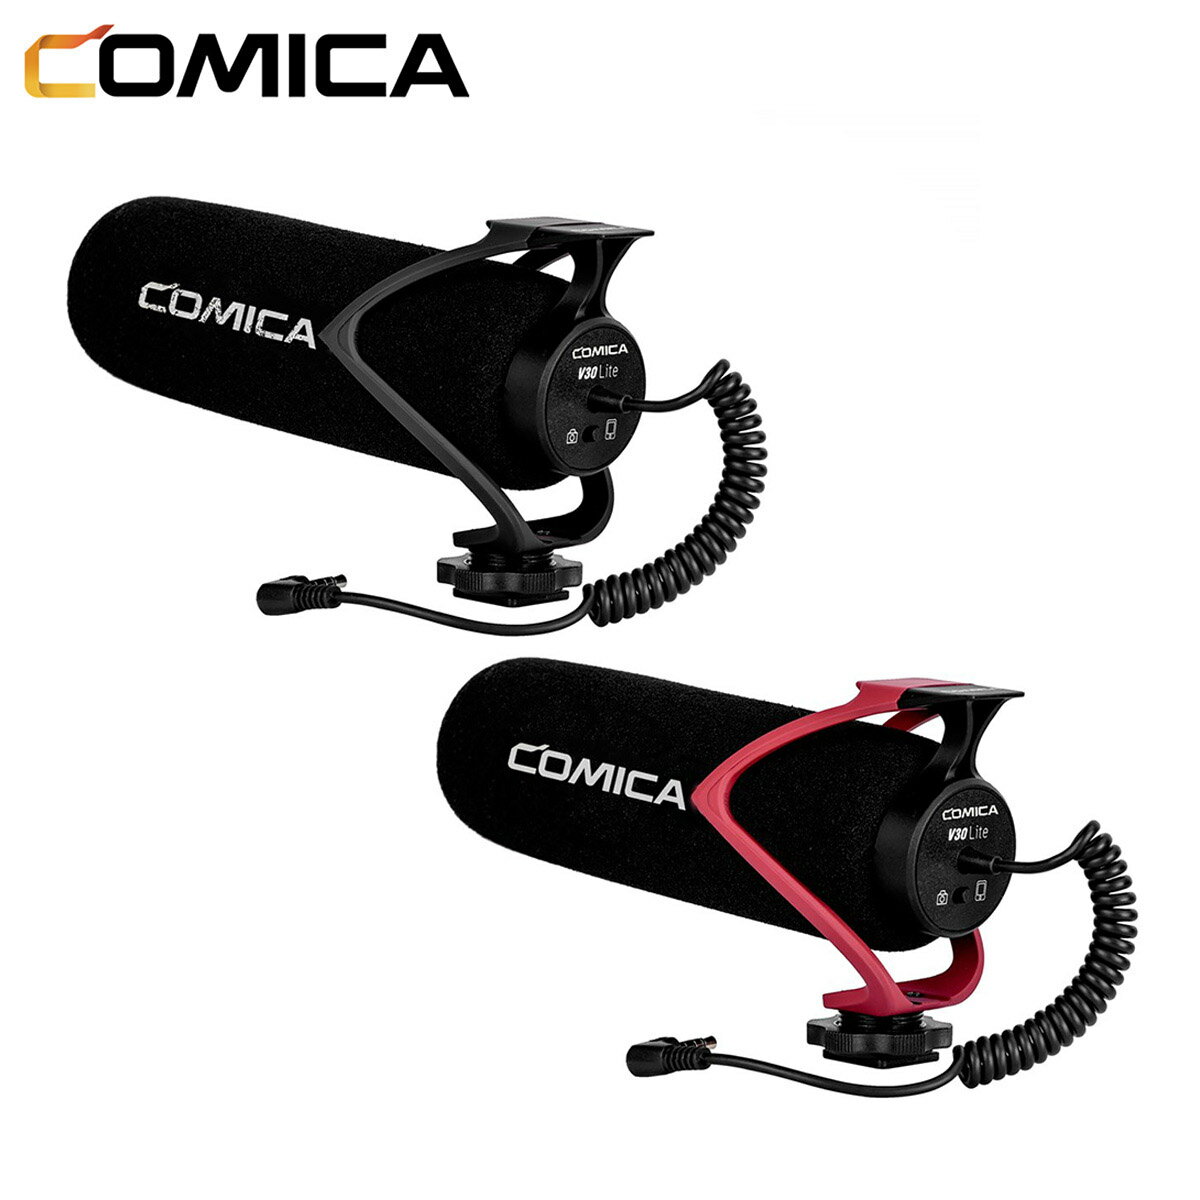 COMICA CVM-V30 LITE カメラ用外付けマイク ガンマイク 外部マイク 指向性マイク カメラ スマートフォン対応 あす楽対応 国内正規品 ブラック レッド